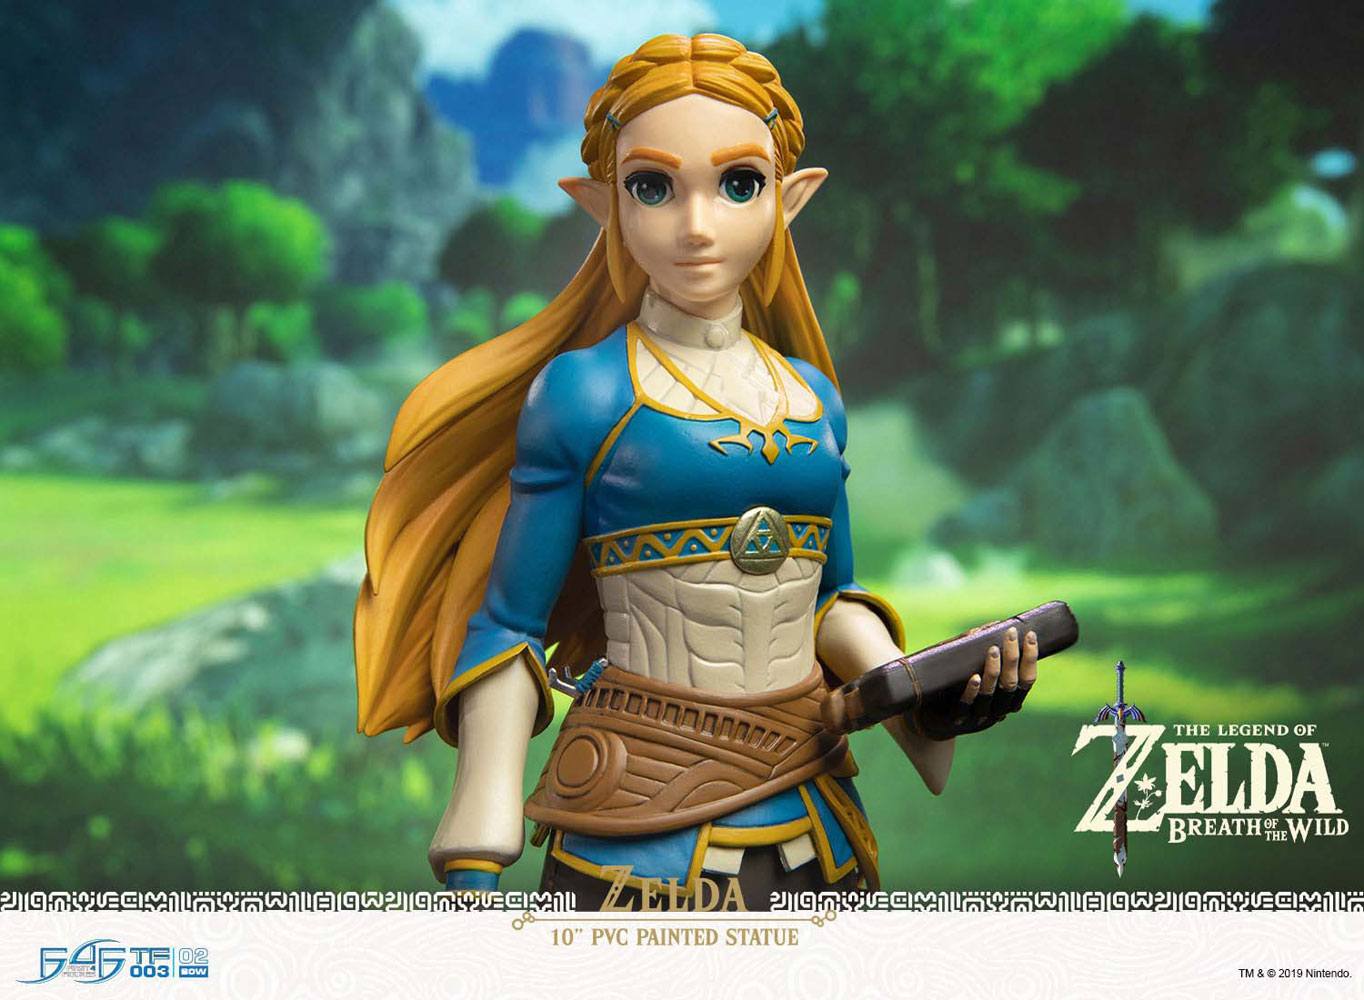 Statuette Link Collector The Legend of Zelda - Deriv'Store